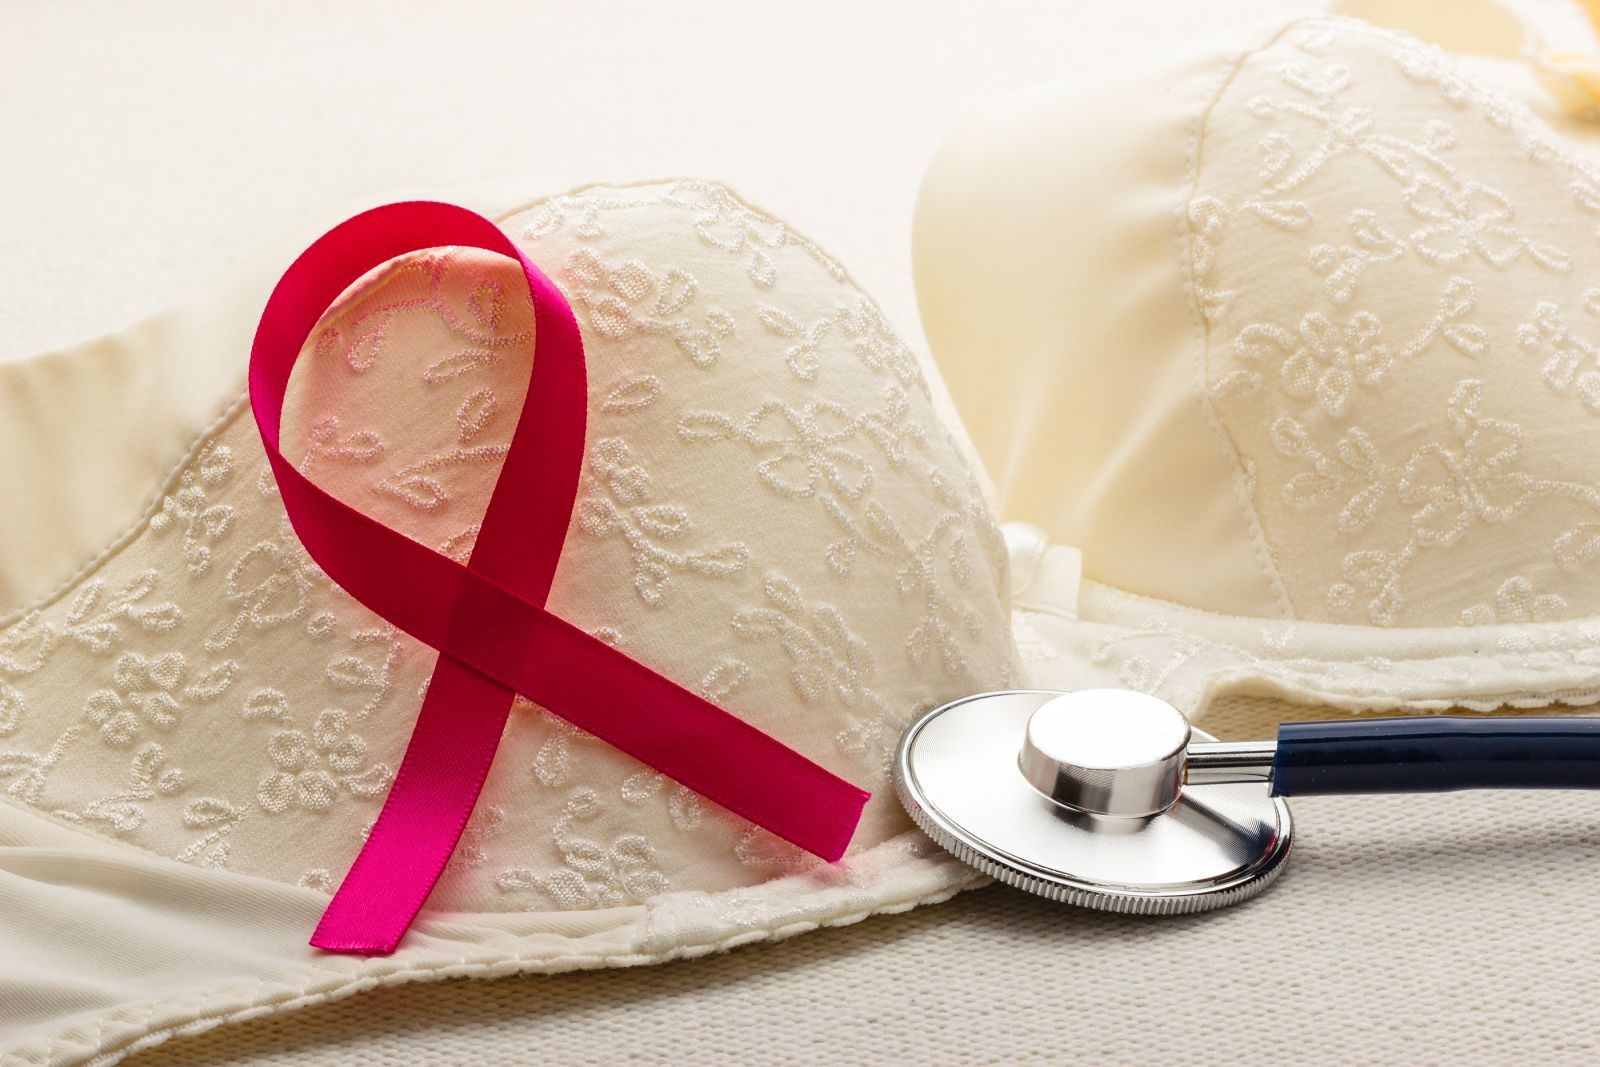 https://www.worldhealth.net/media/original_images/Breast-Cancer-Awareness-Bra-Concep-87988418.jpg